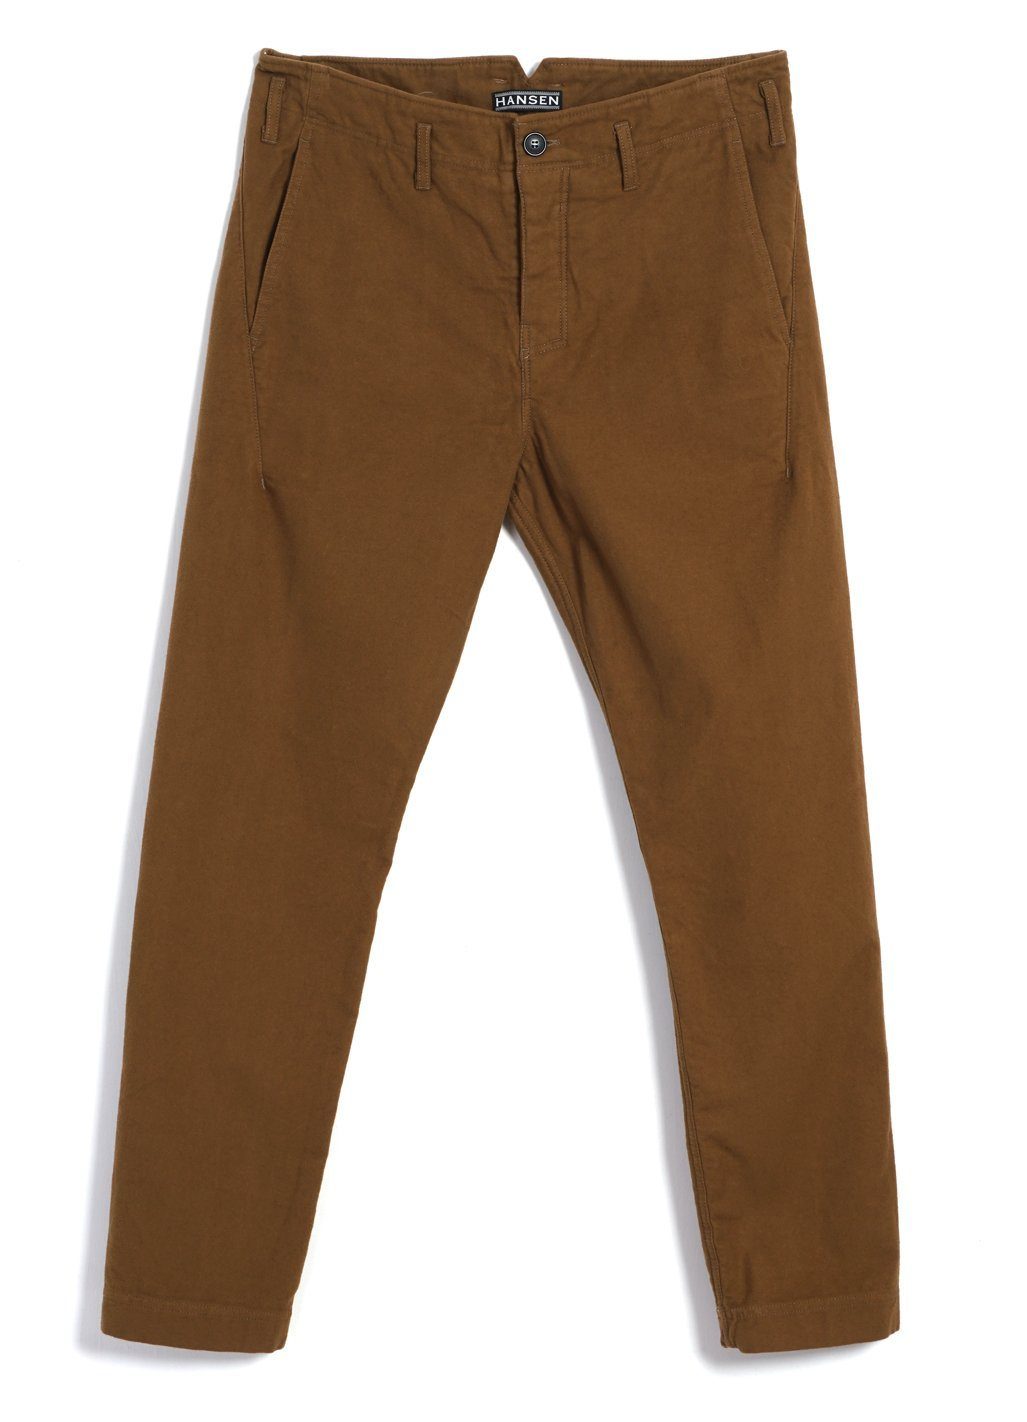 HANSEN GARMENTS - SVENNING | Slim Fit Trousers | Turmeric - HANSEN Garments